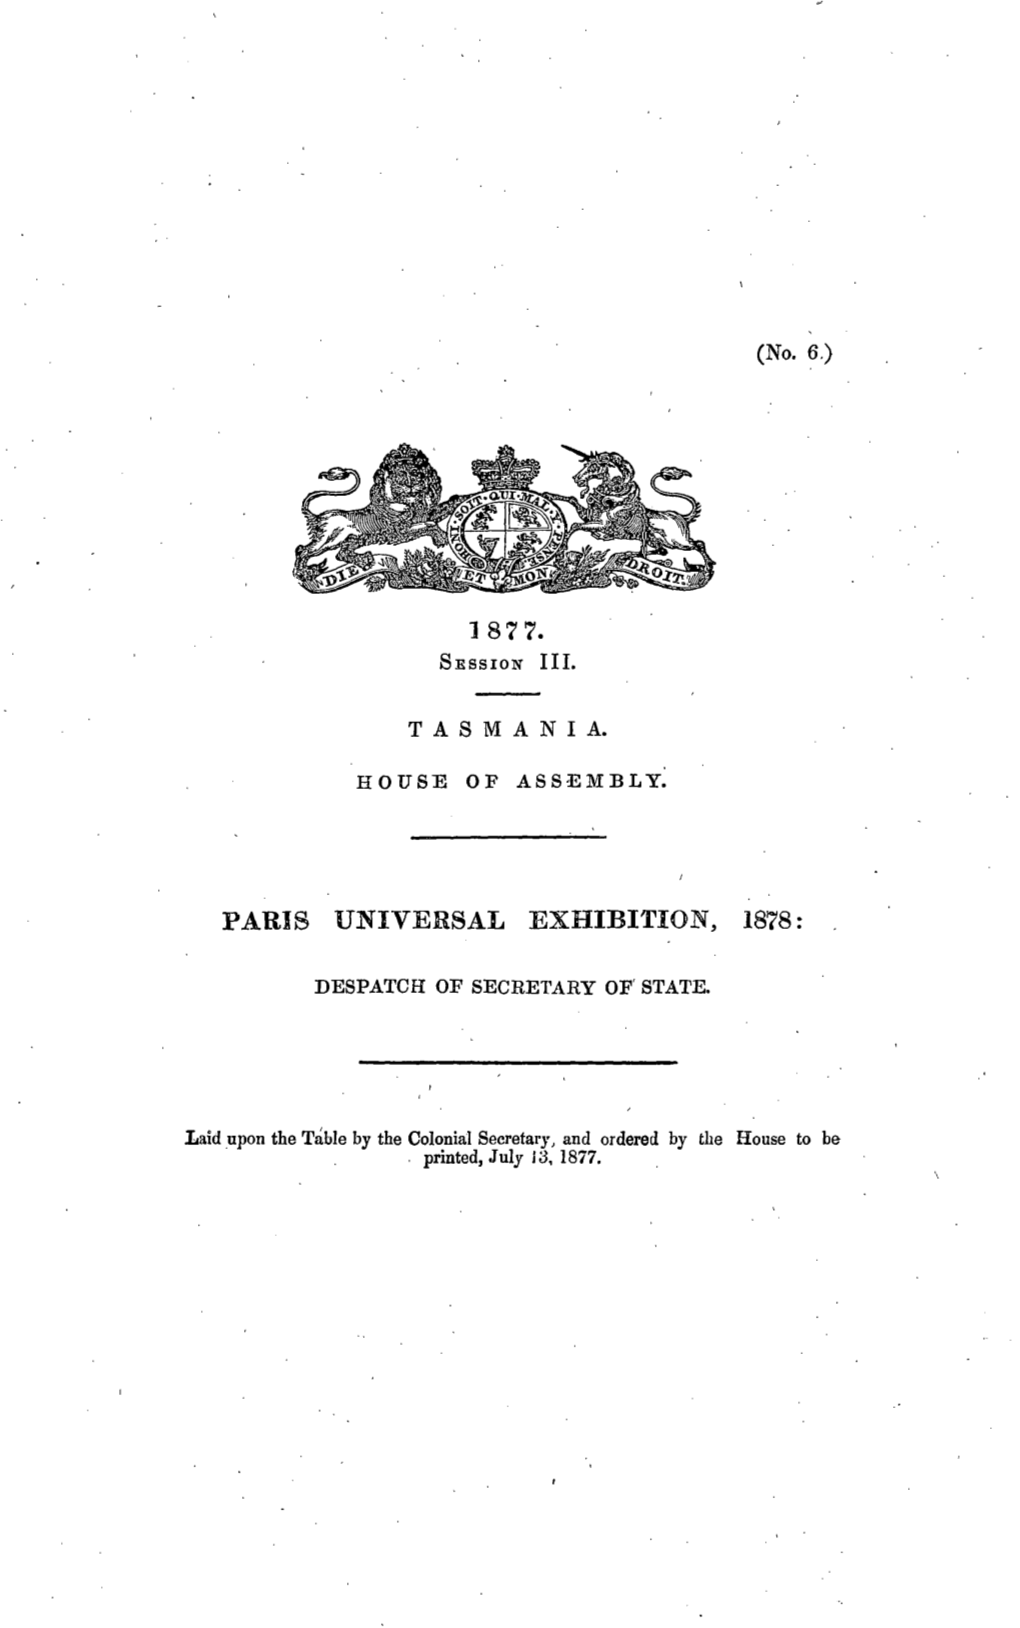 Paris Universal Exhibition 1878 Despatch of Secretary of State